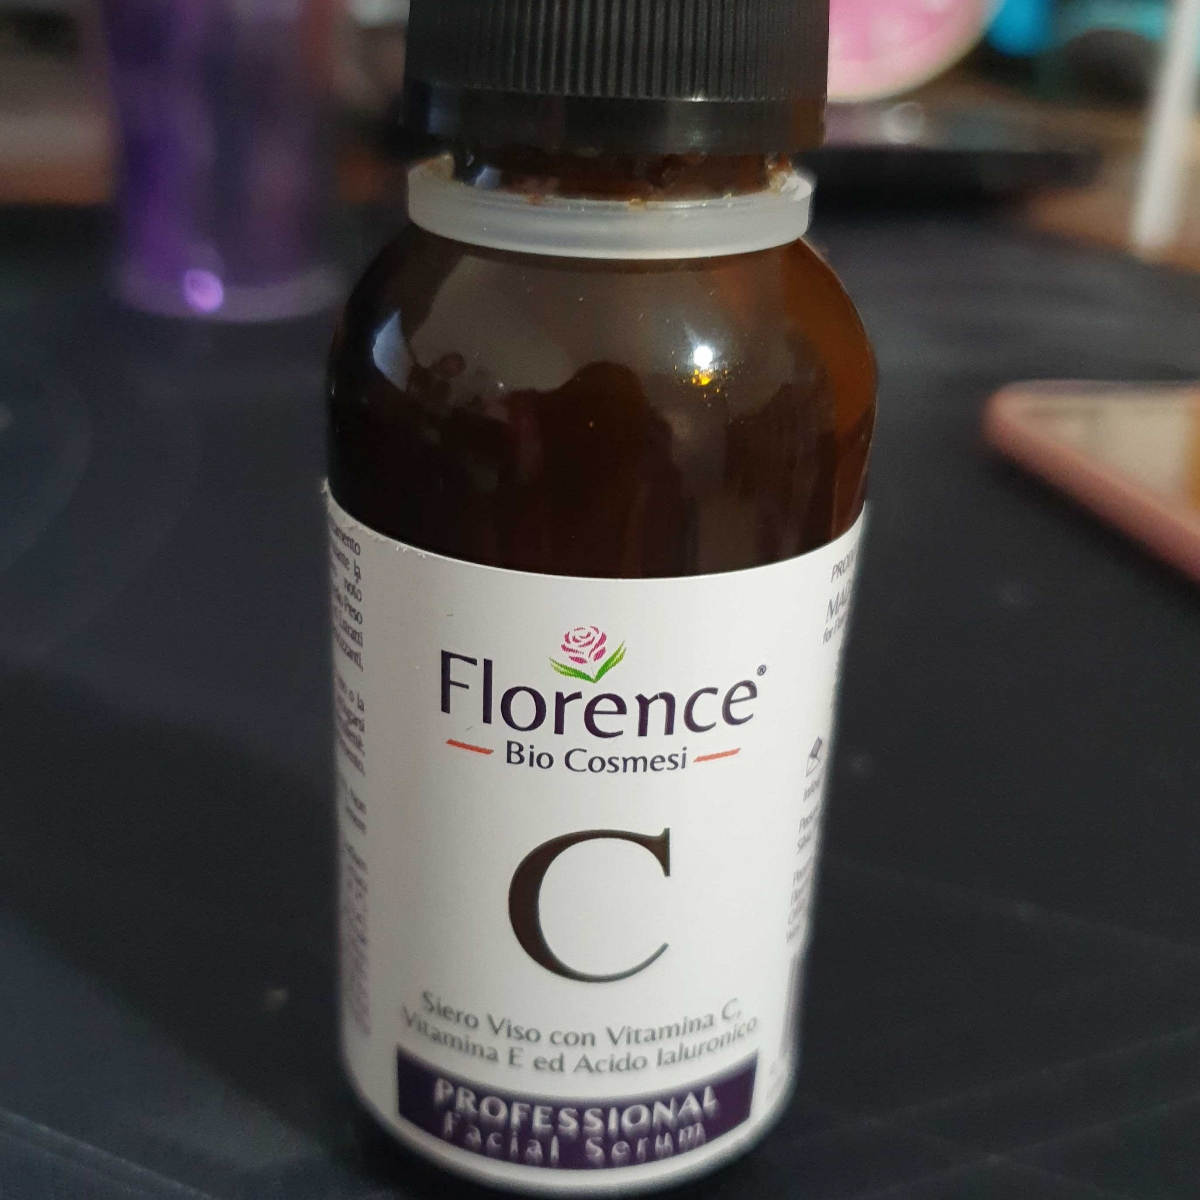 Florence Bio Cosmesi Siero Viso Vitamina C e Acido ialuronico Reviews |  abillion